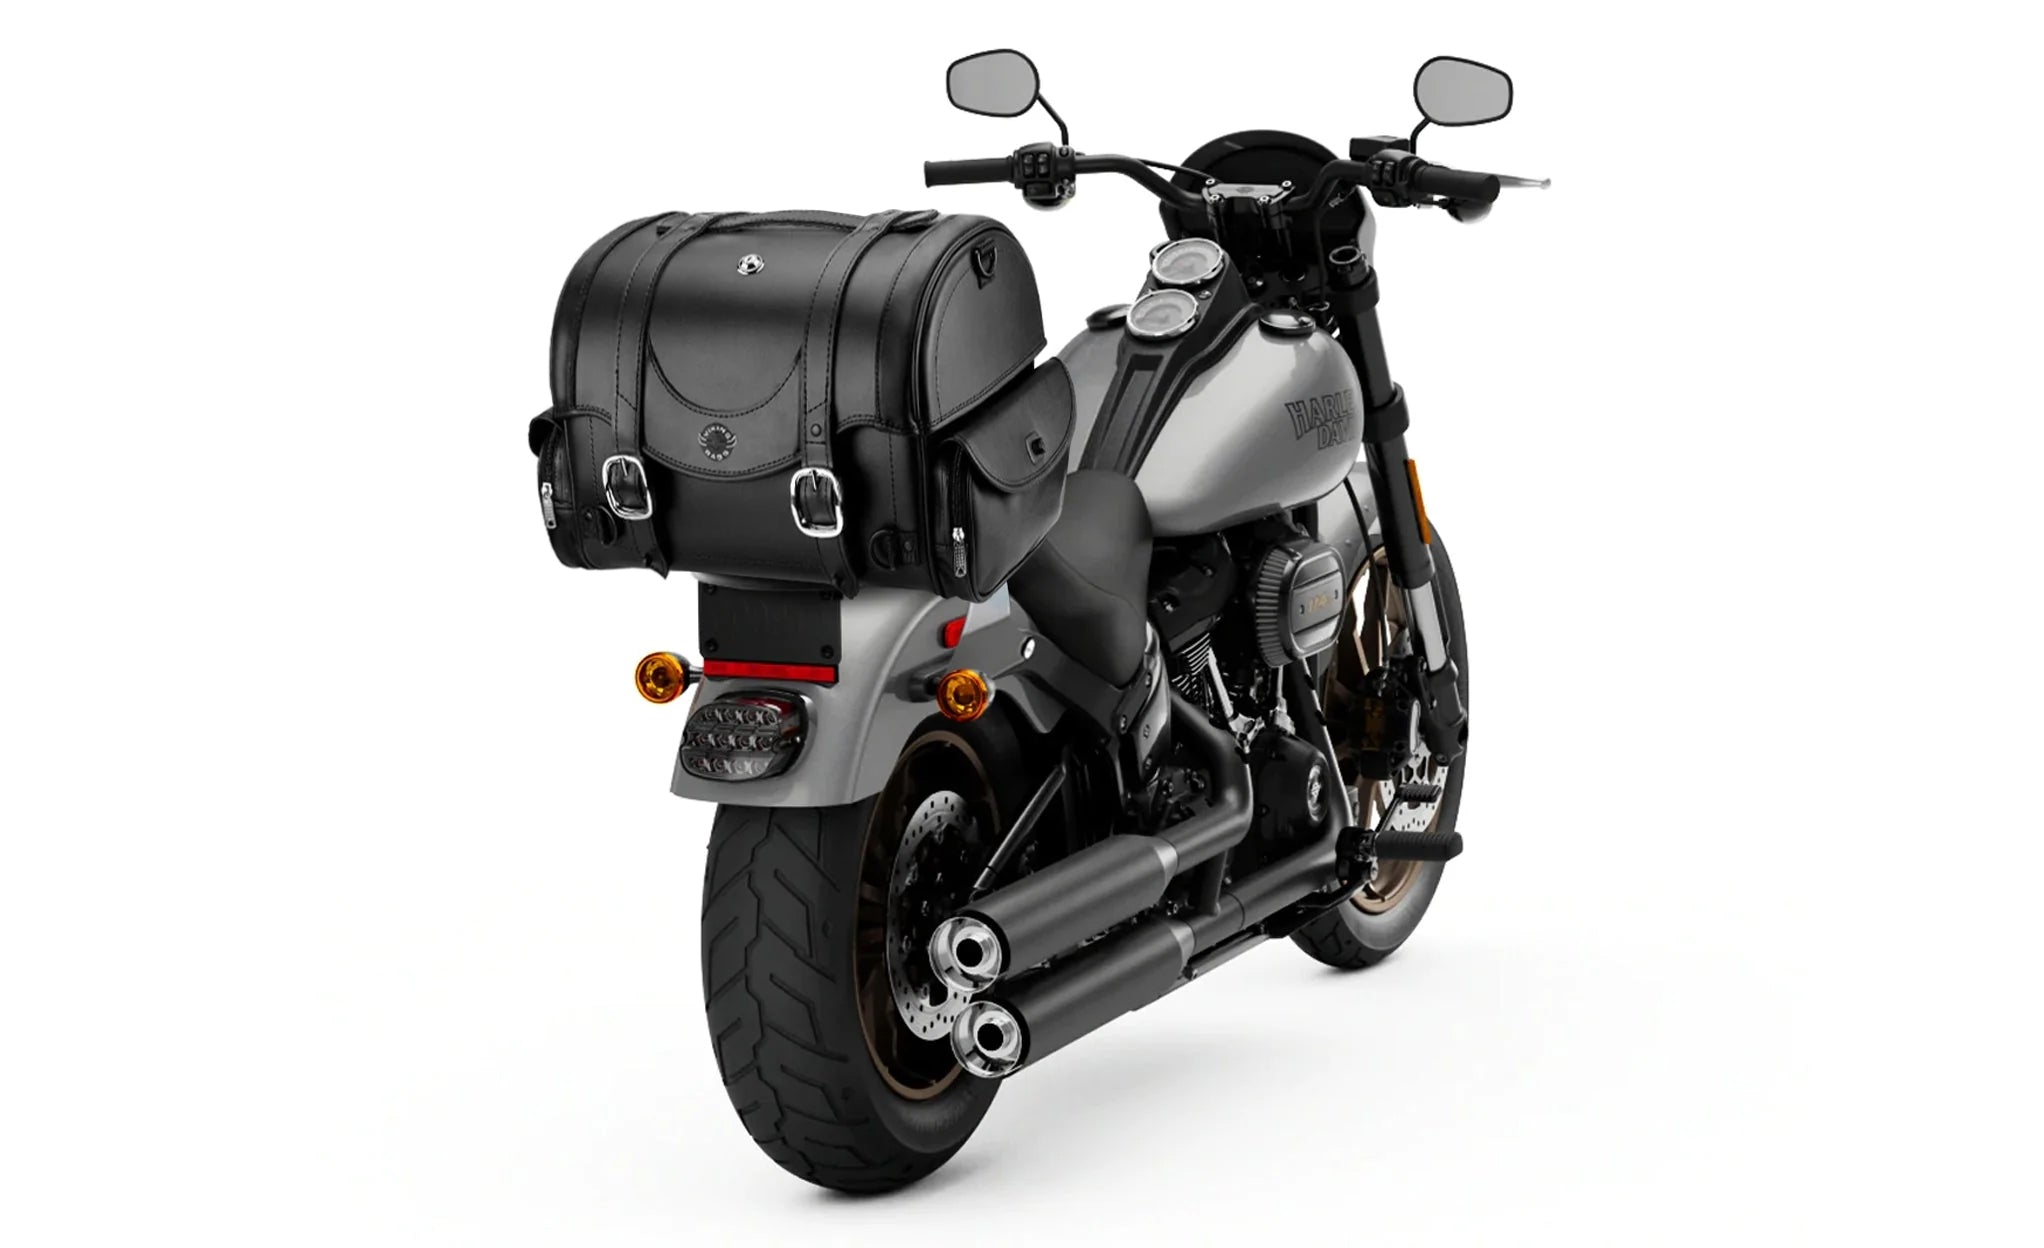 21L - Century Medium Suzuki Leather Motorcycle Sissy Bar Bag on Bike Photo @expand